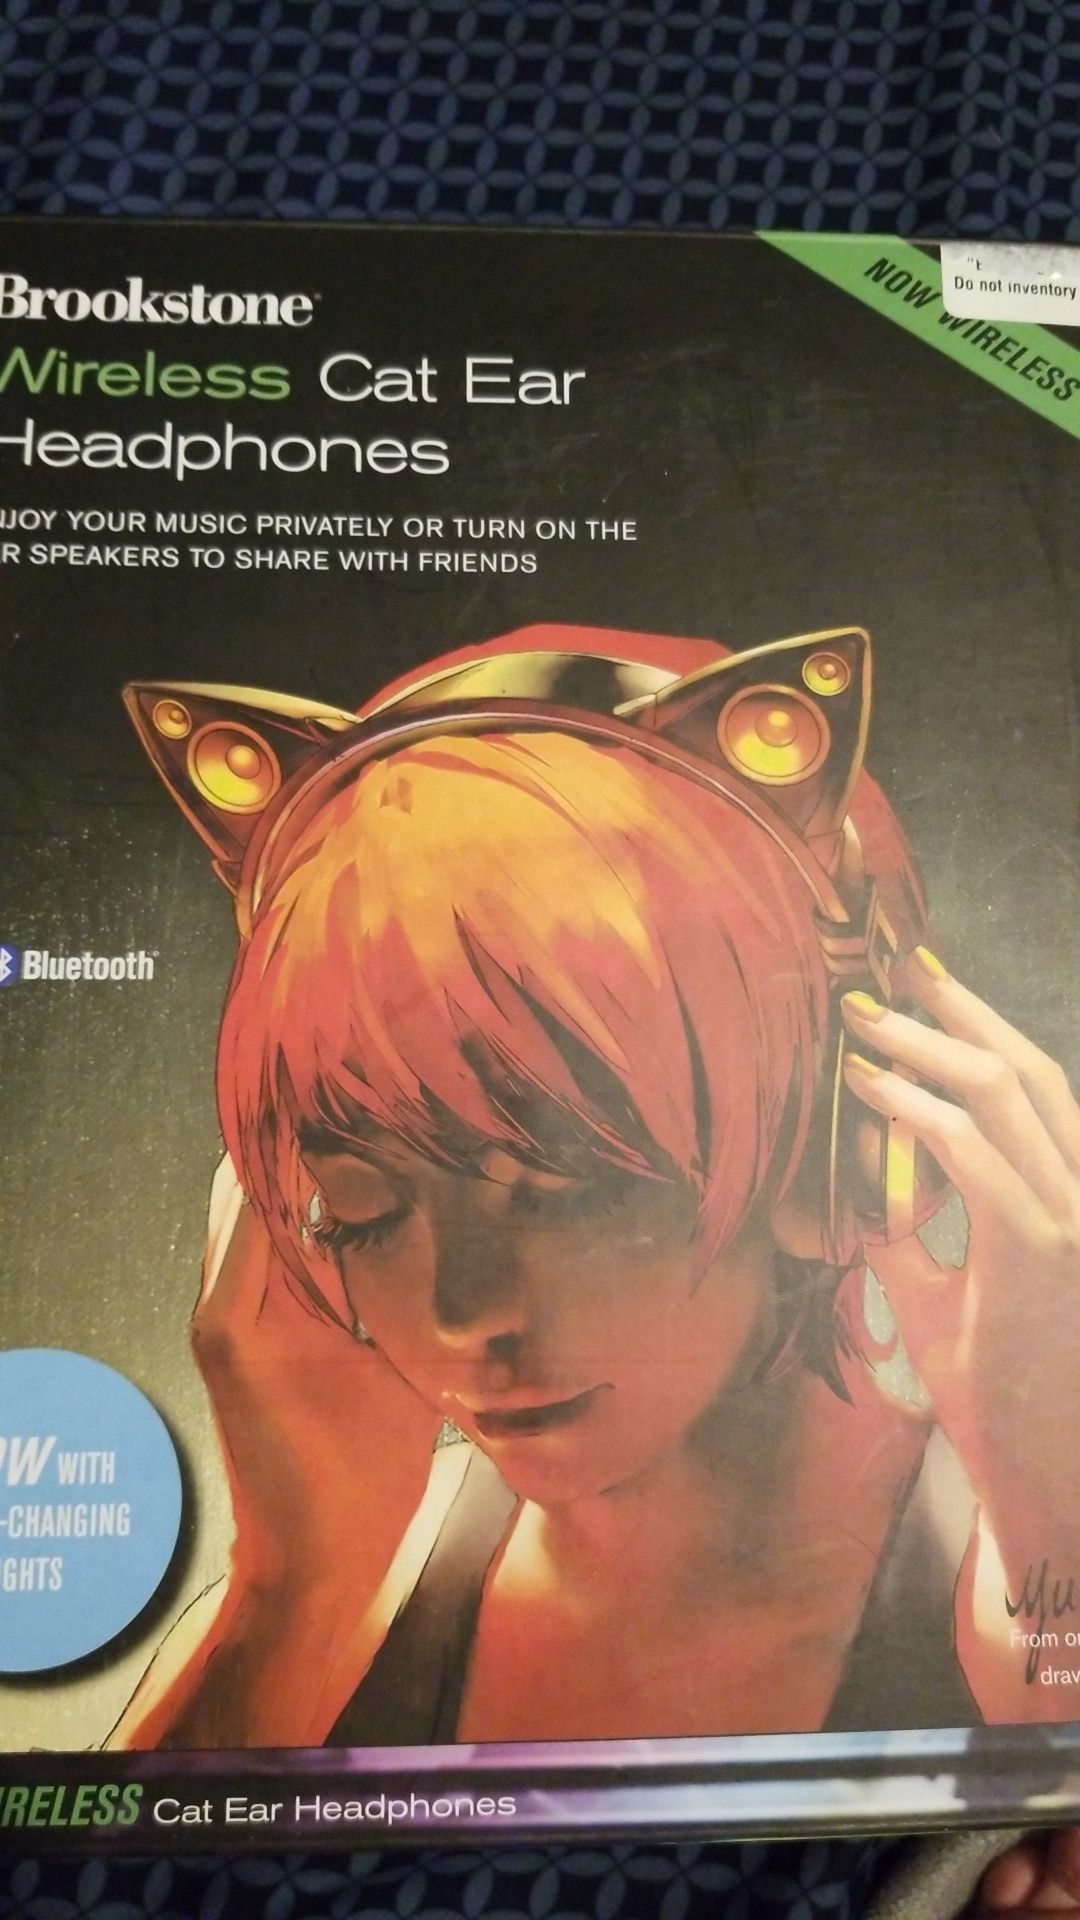 Brookstone wireless cat ear headphones